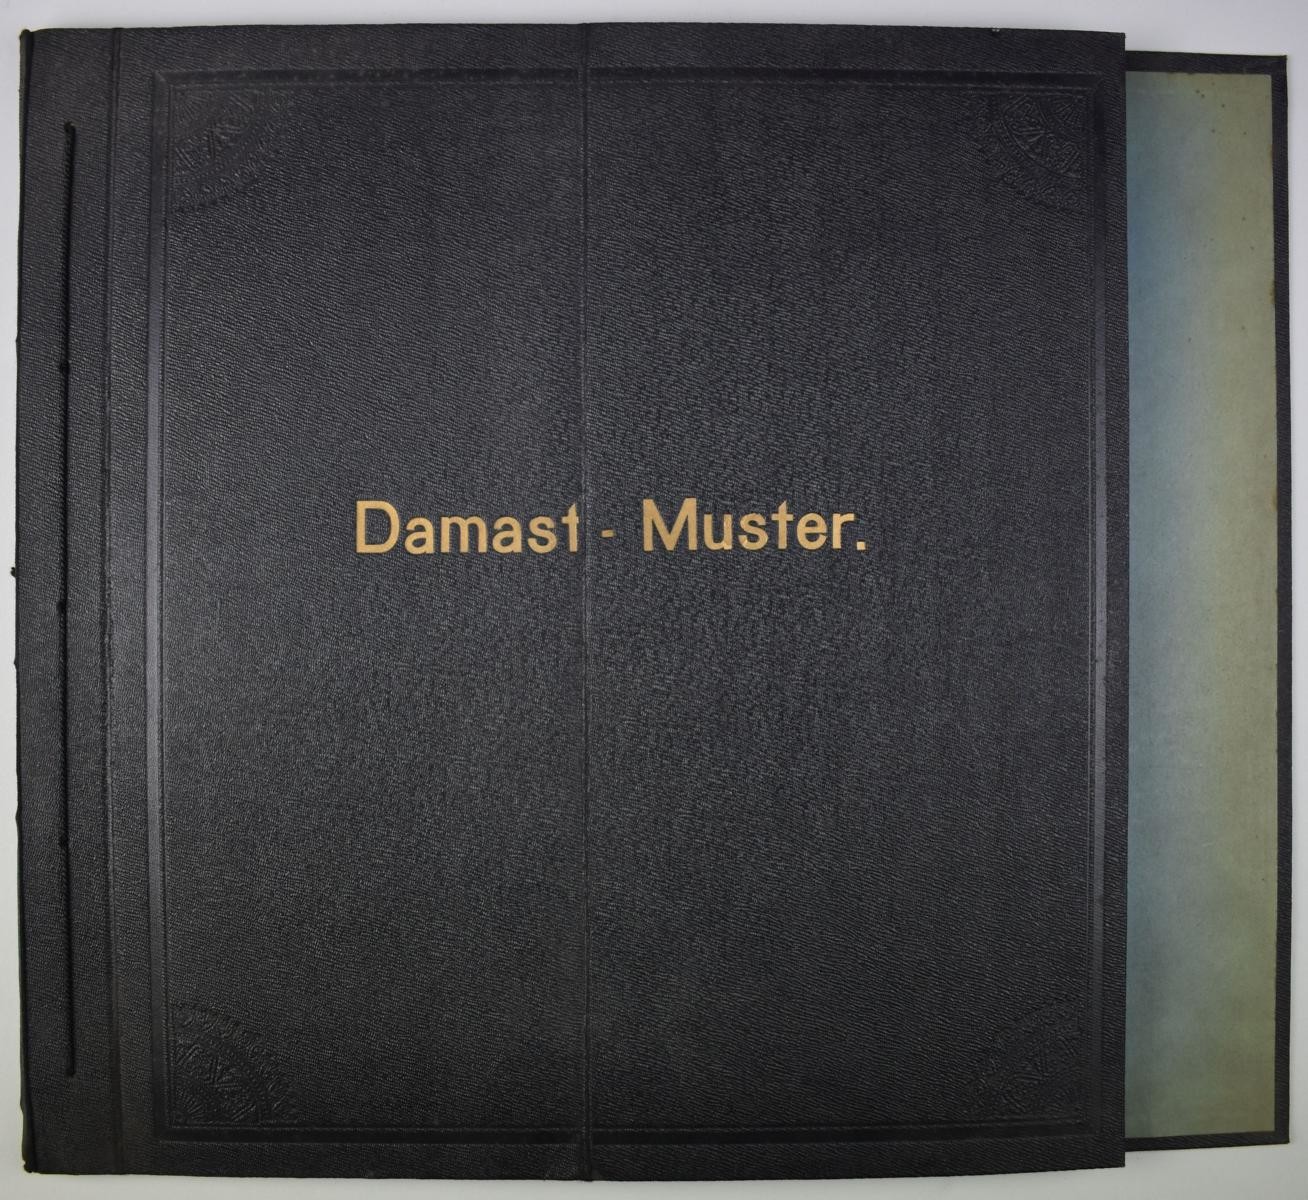 Musterbuch "Damast-Muster" (Deutsches Damast- und Frottiermuseum CC BY-NC-SA)